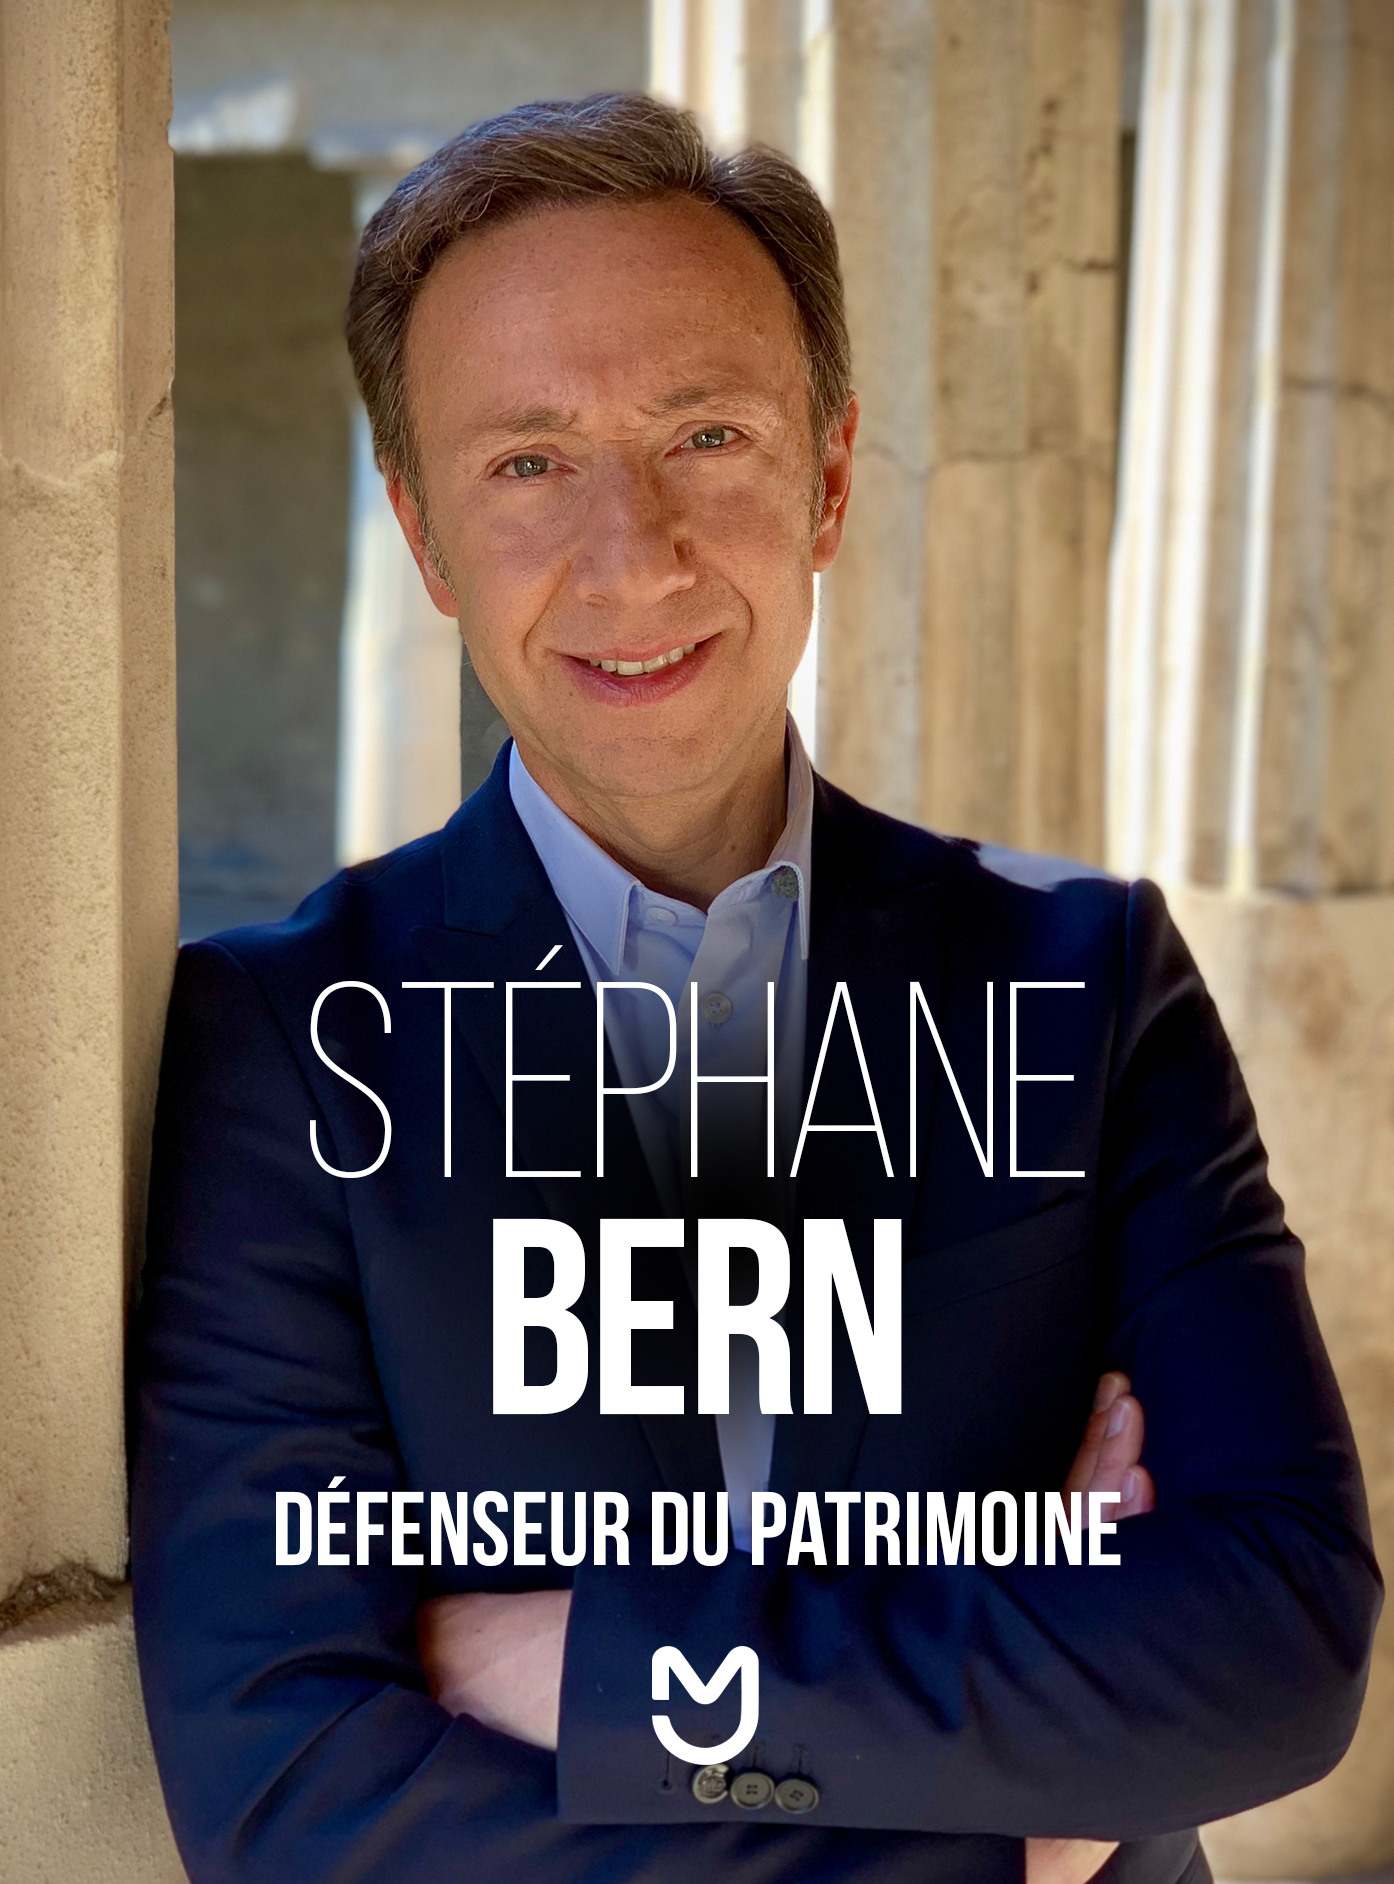 Stéphane Bern, défenseur du patrimoine